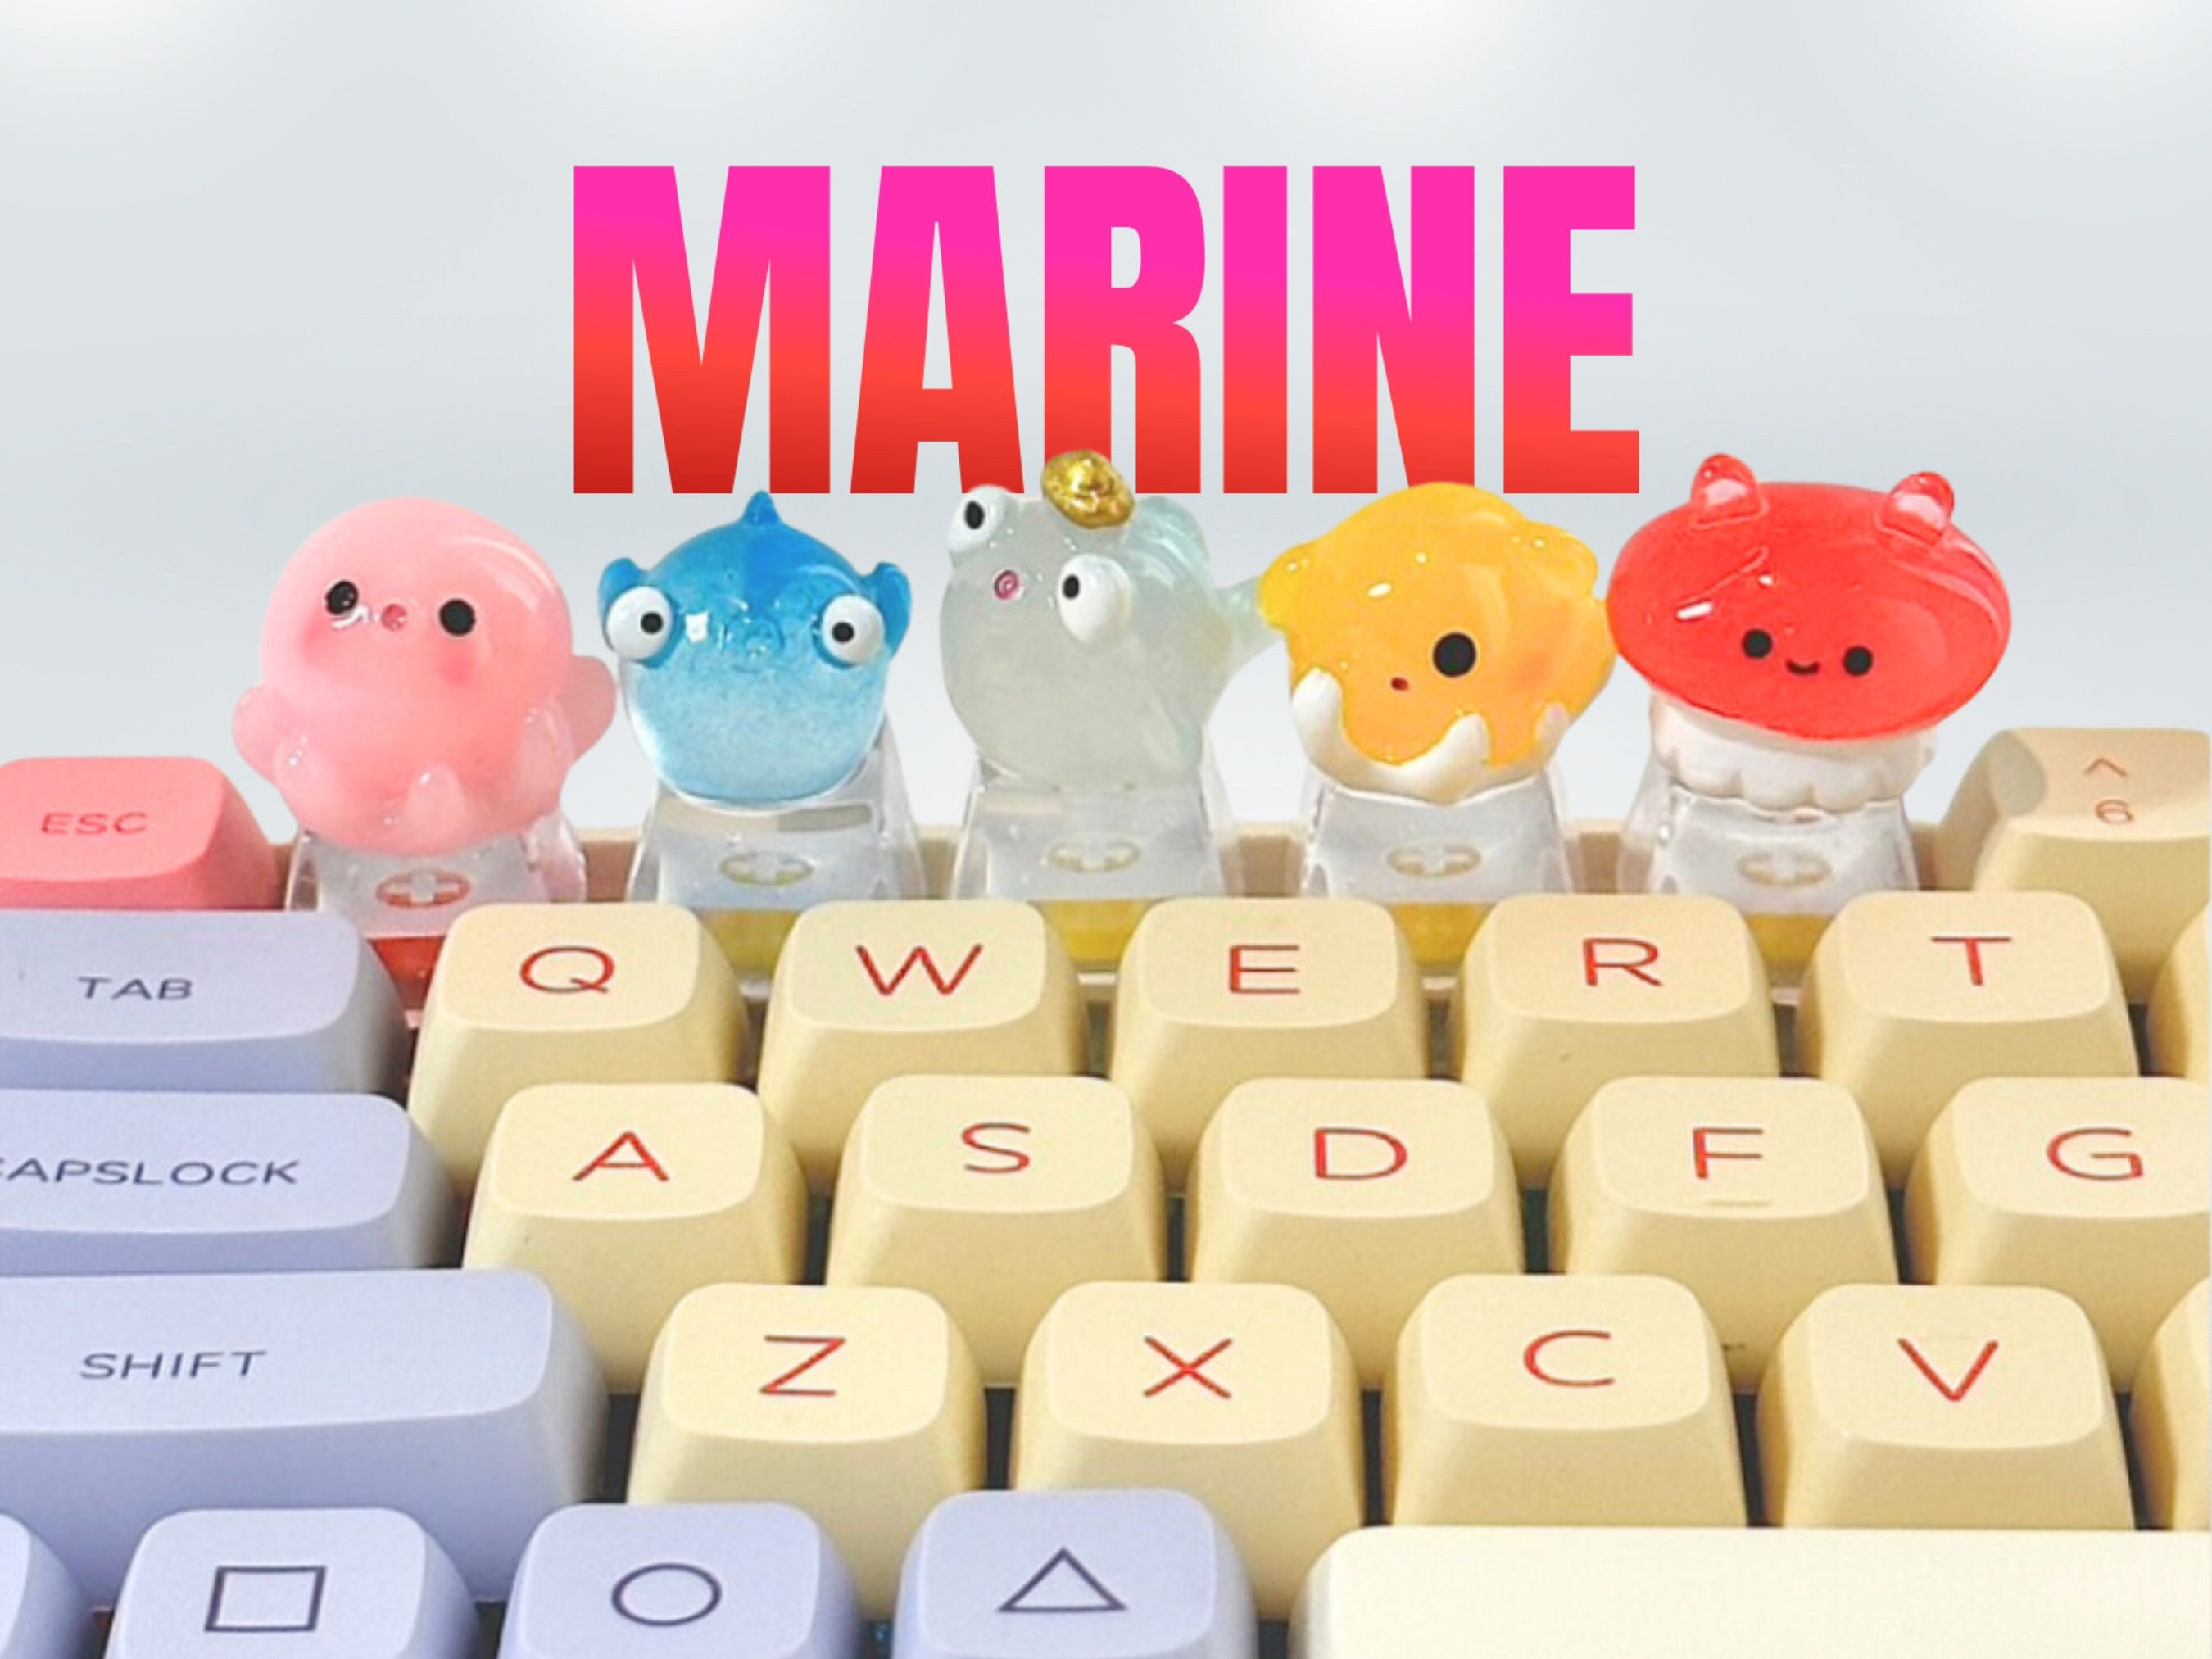 Marine Keycap, Kawaii Animal Keycap, Artisan Keycap, Keycap for MX Cherry Switches Mechanical Keyboard, Handmade Gift